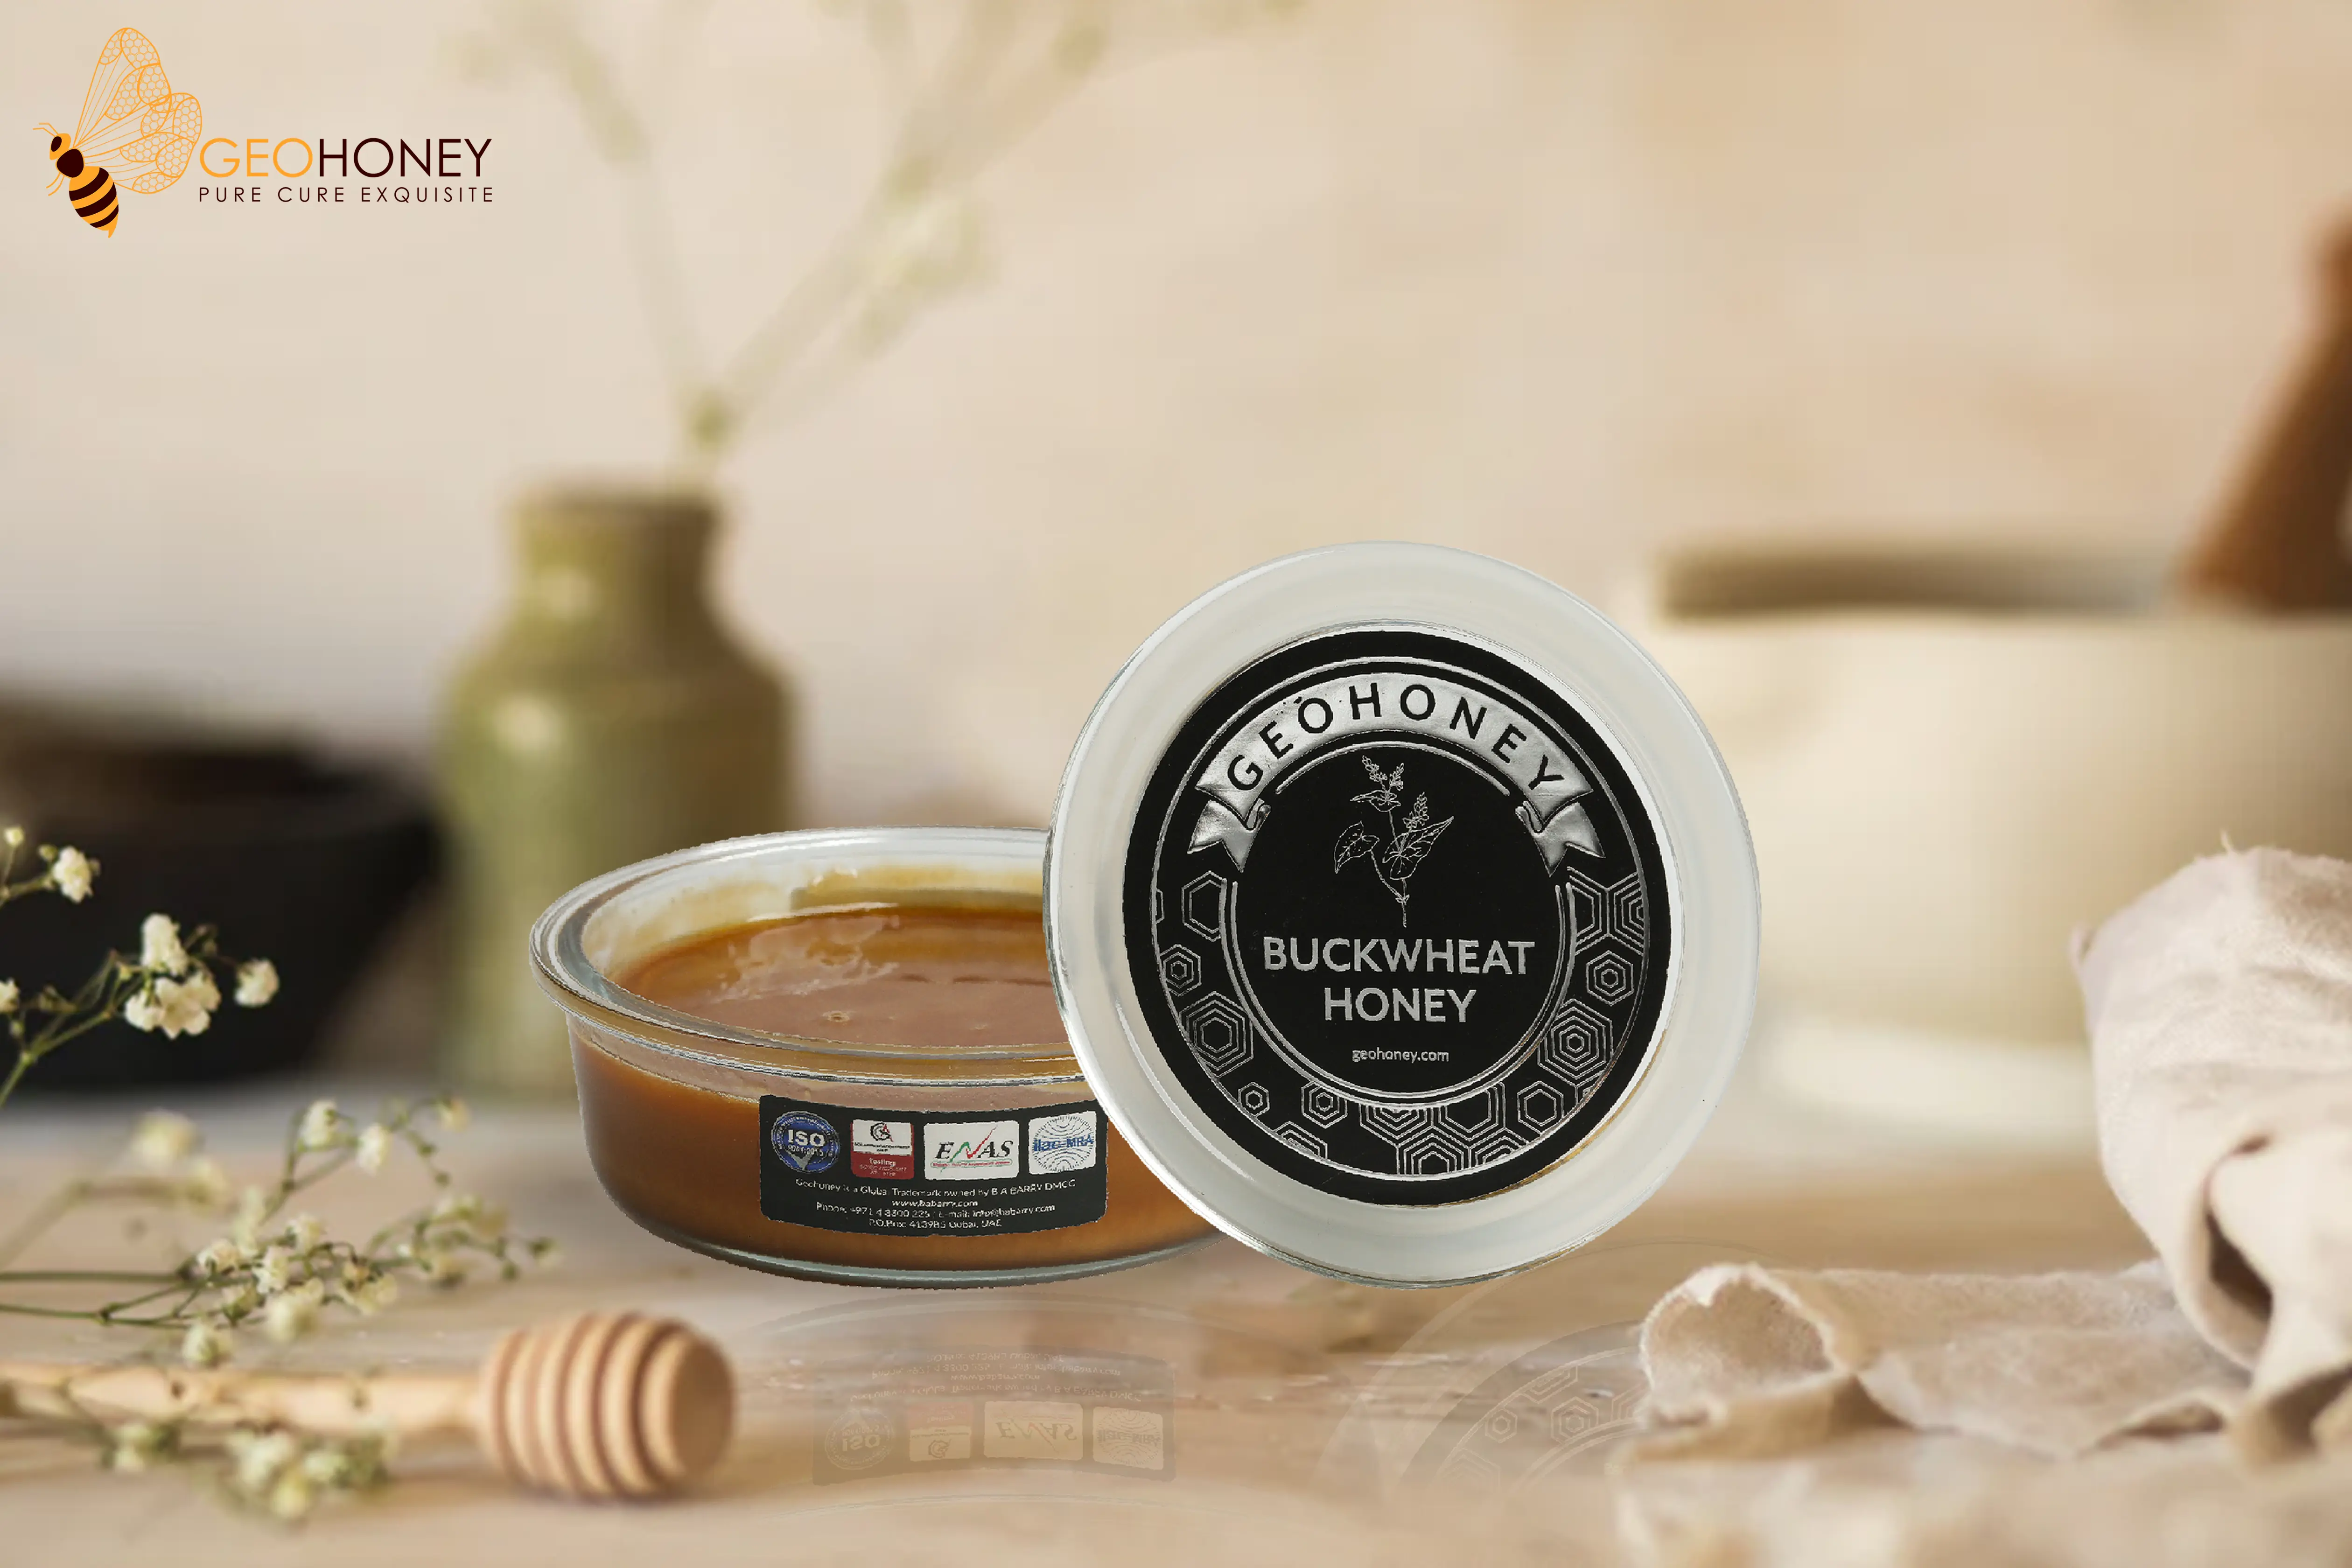 Image of Buckwheat Honey with text “Unlocking the Secrets of Buckwheat Honey with its Nutritional Benefits“